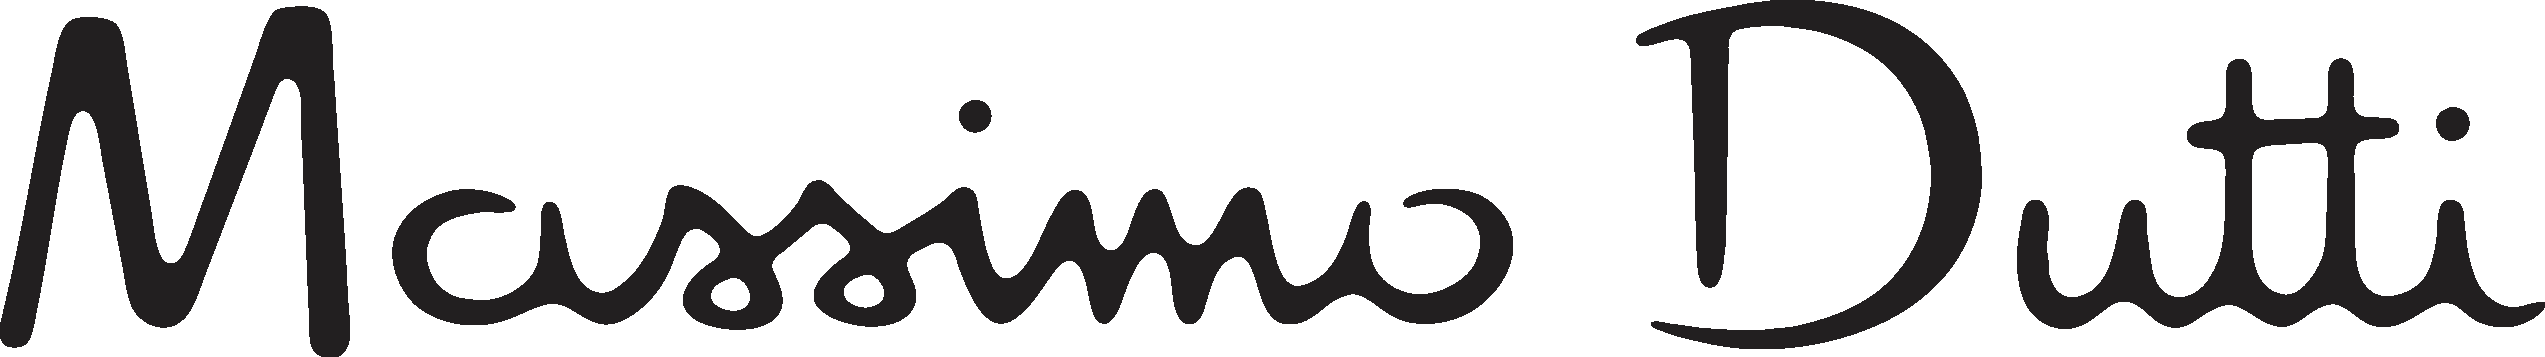 massimodutti-logo